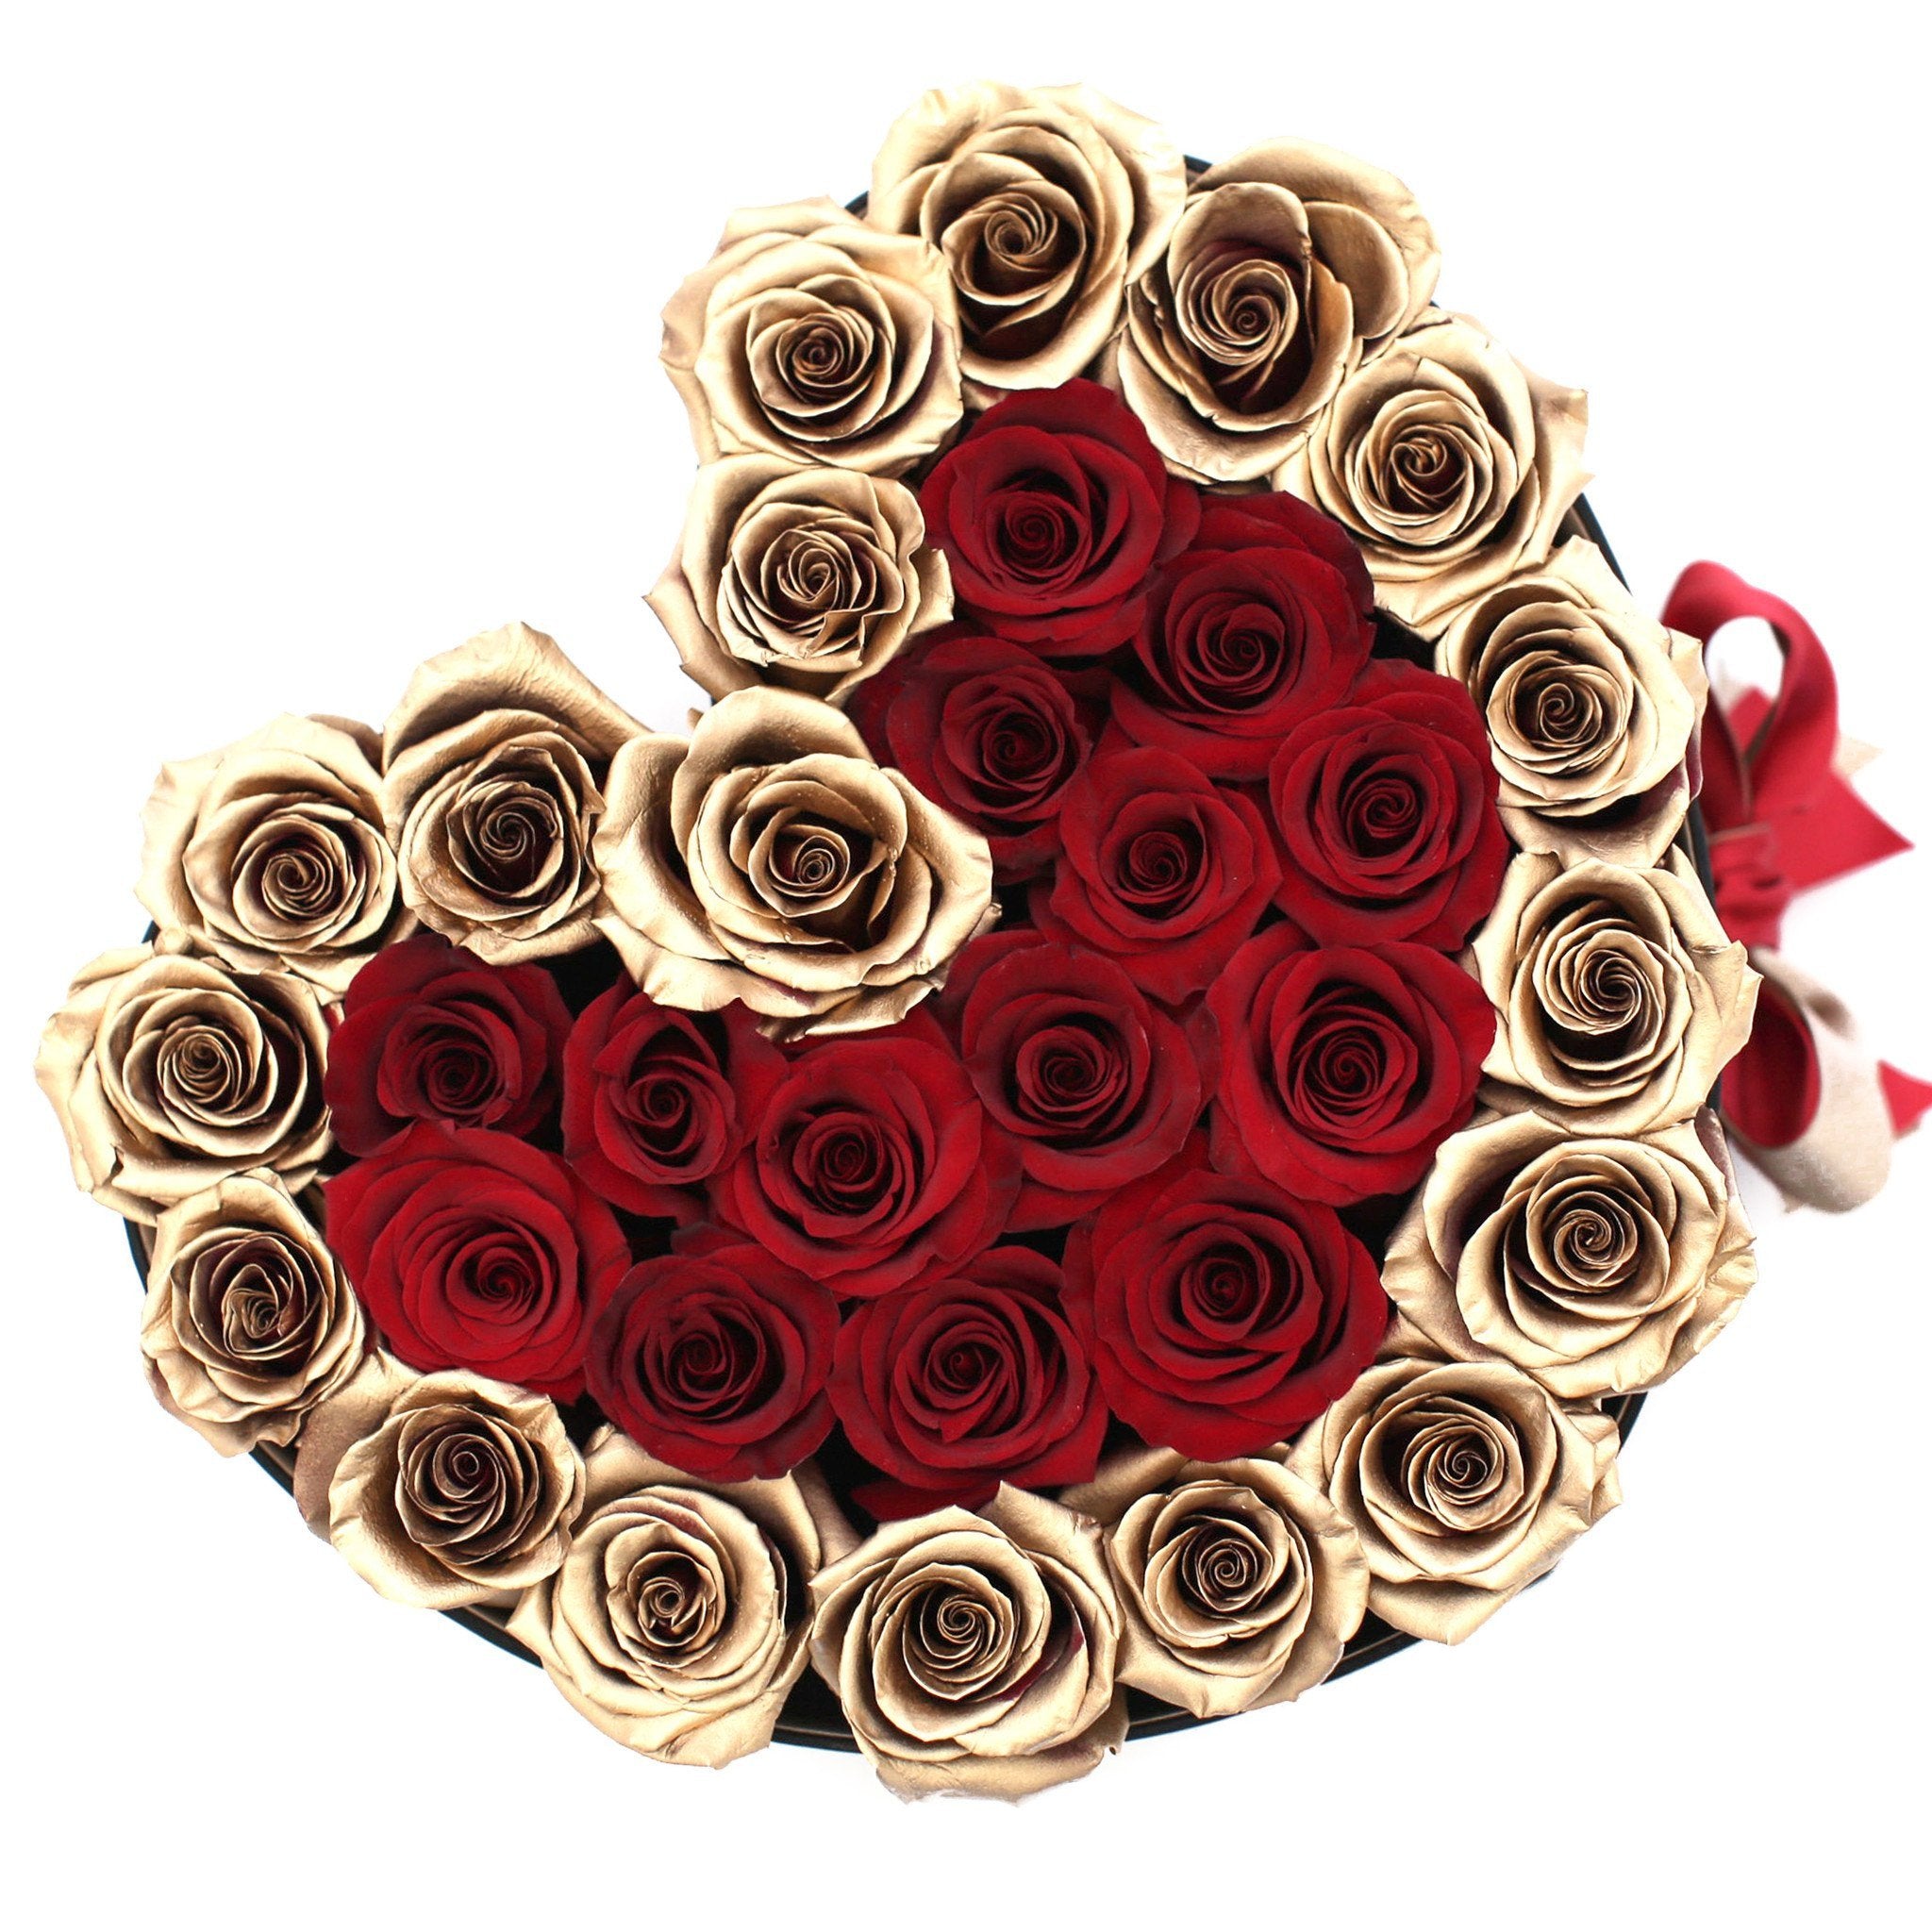 LOVE box - black - 24k gold&red roses mixed eternity roses - the million roses